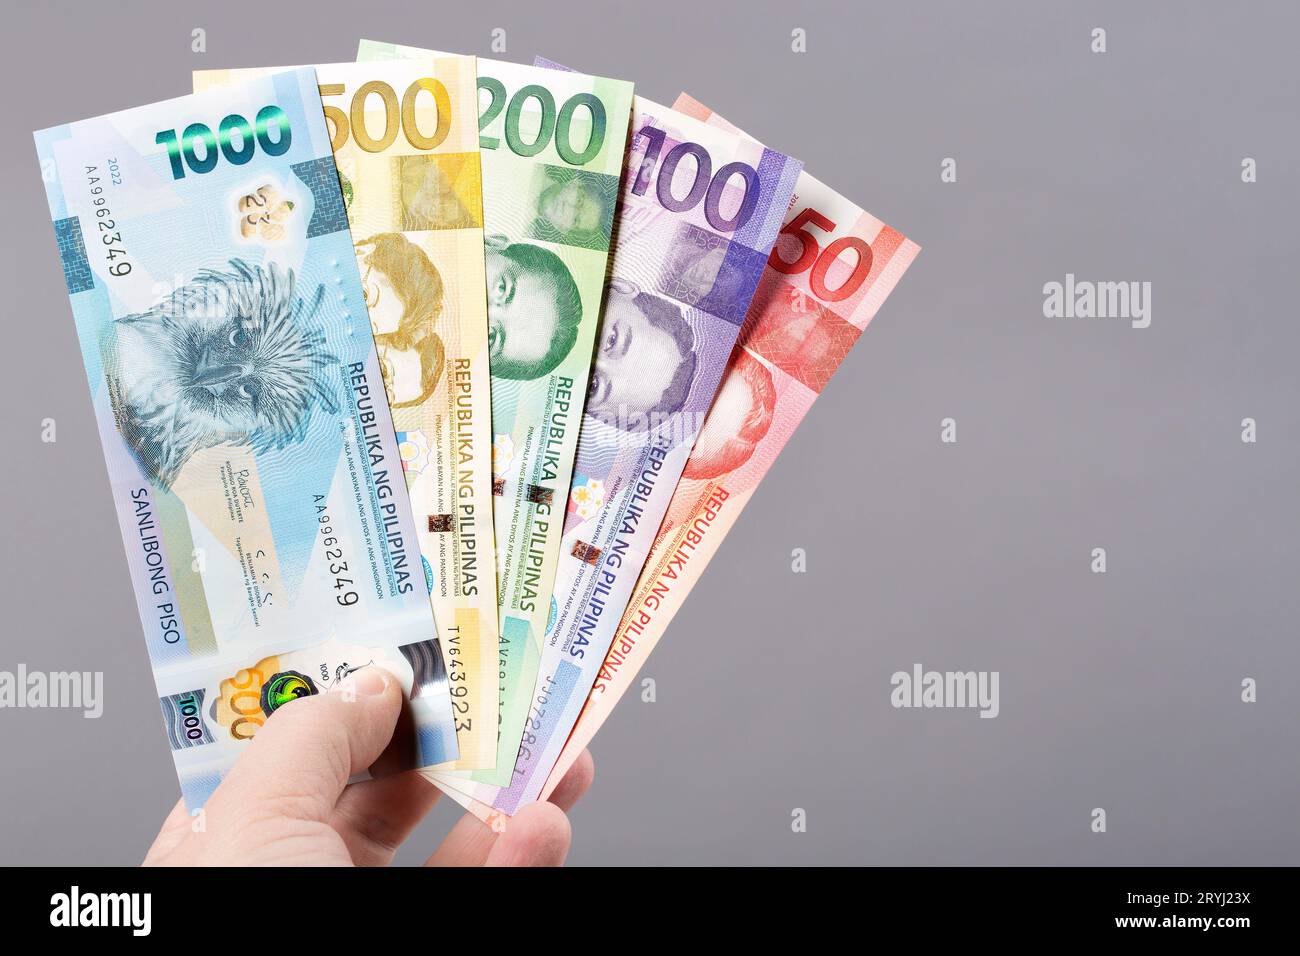 Philippine money on a gray background Stock Photo